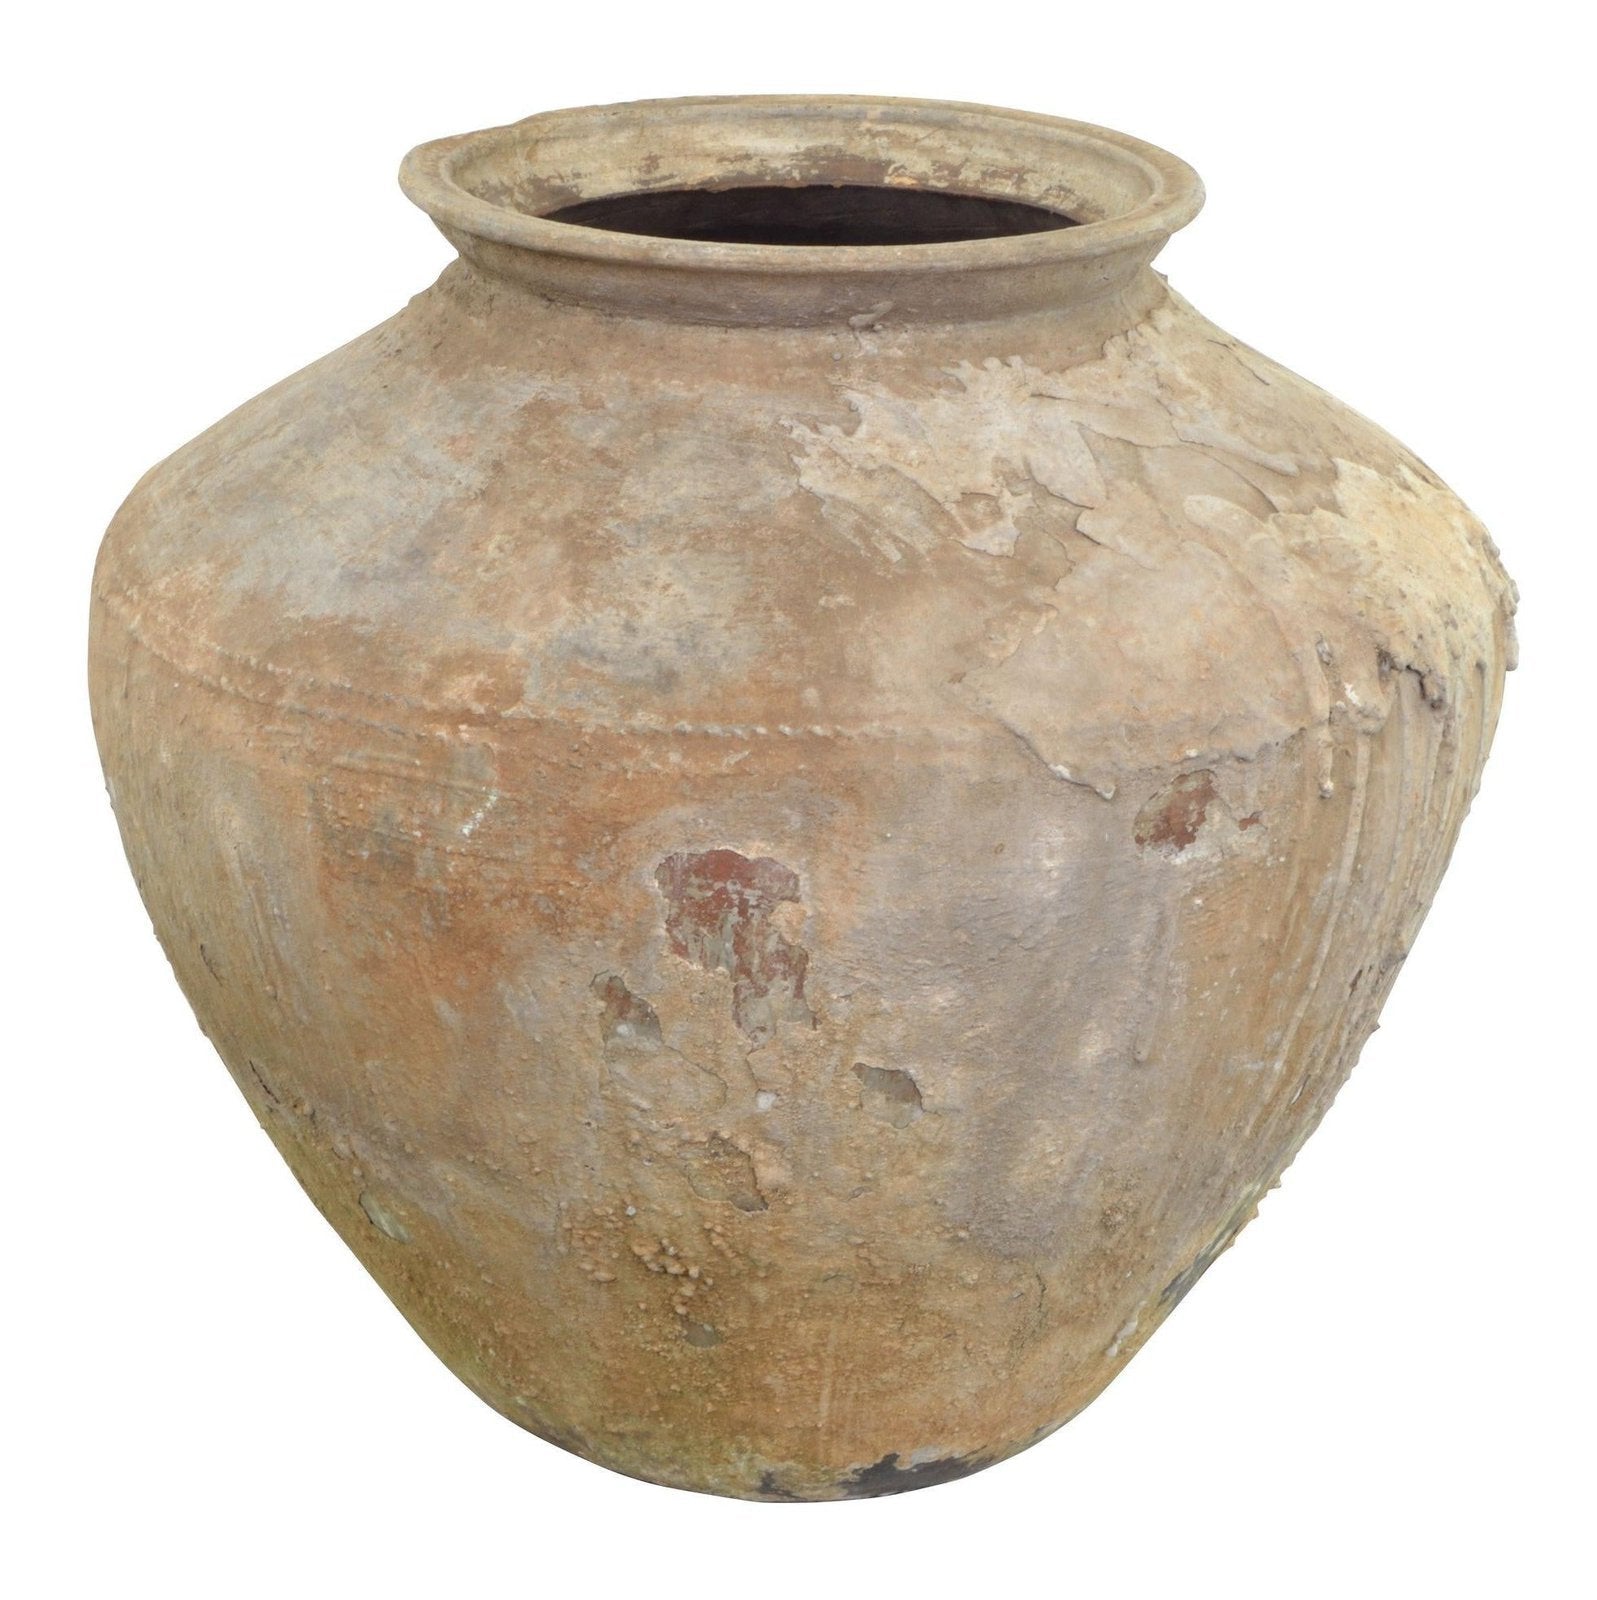 Restoration Water Pot